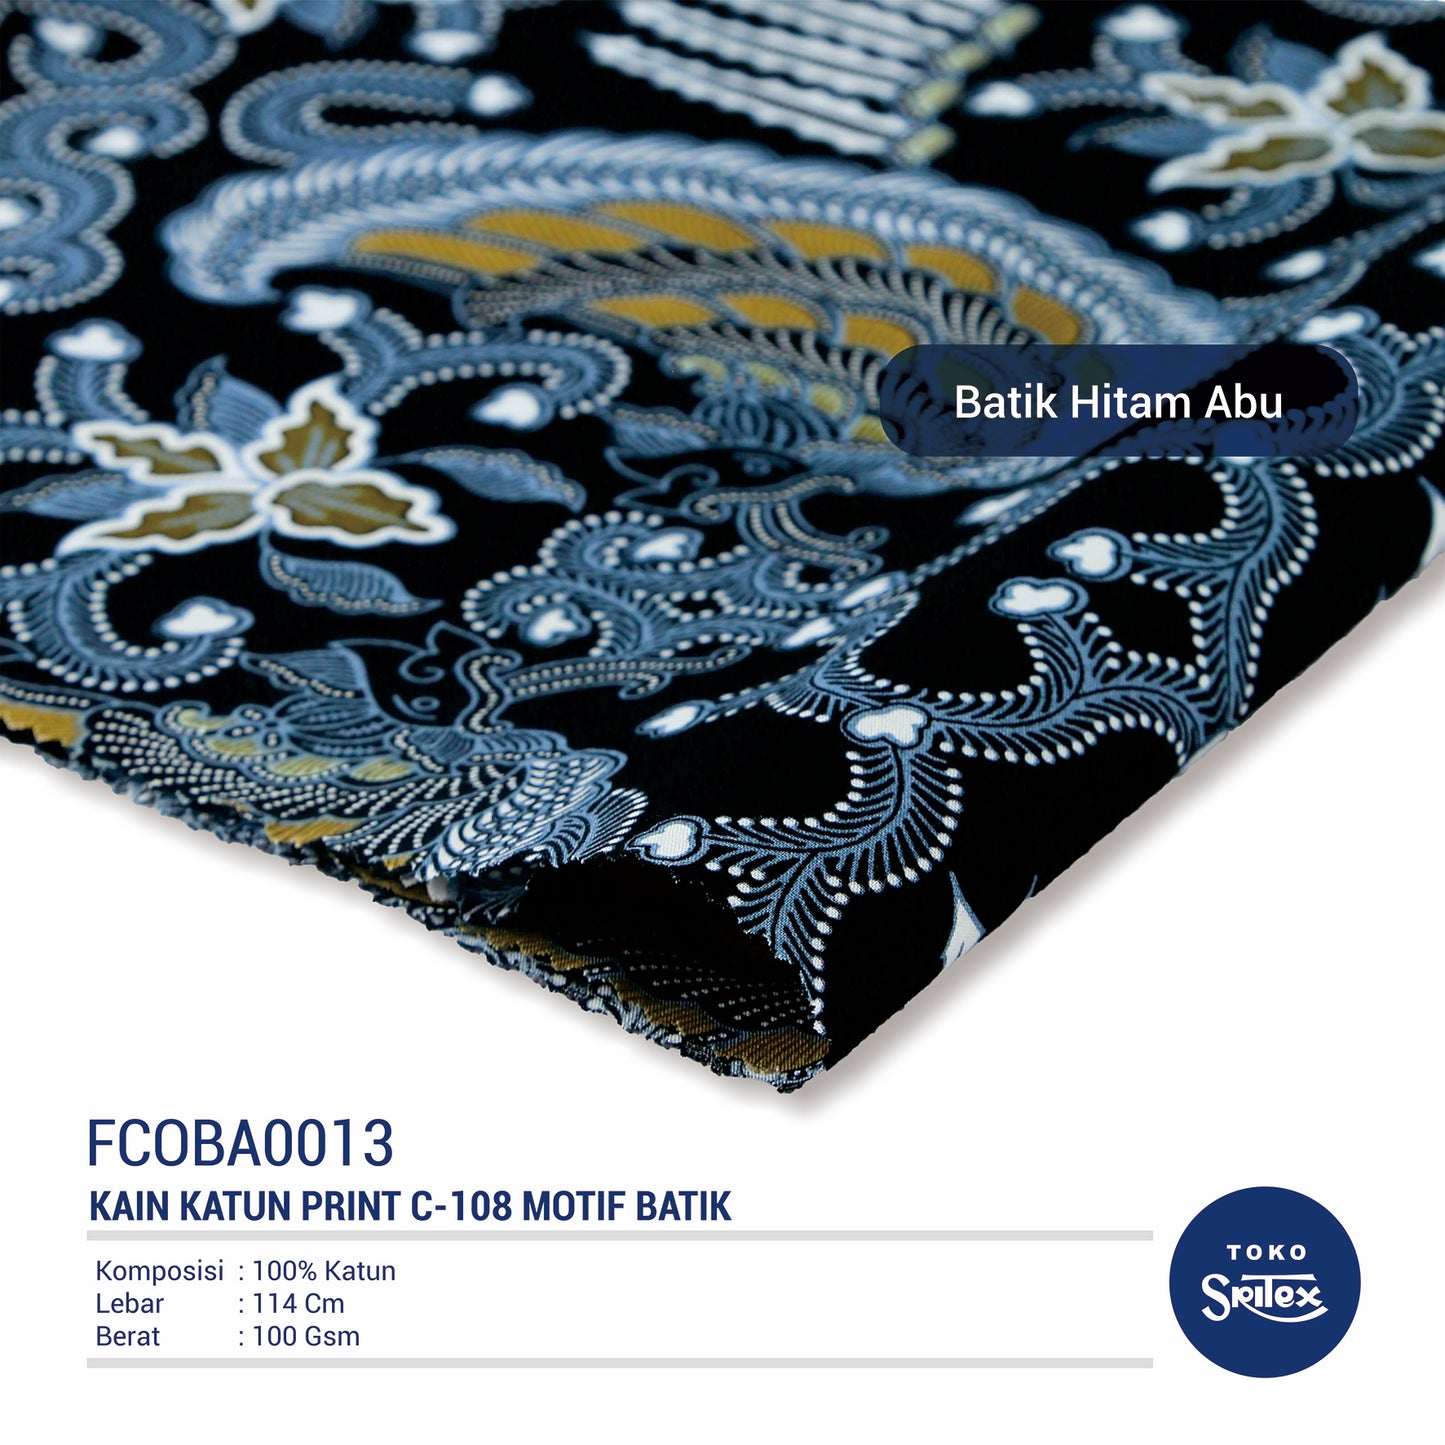 Toko Sritex Kain Katun Print Batik 0013 Premium Ekspor C108. Harga per 45cm, Lebar 114cm